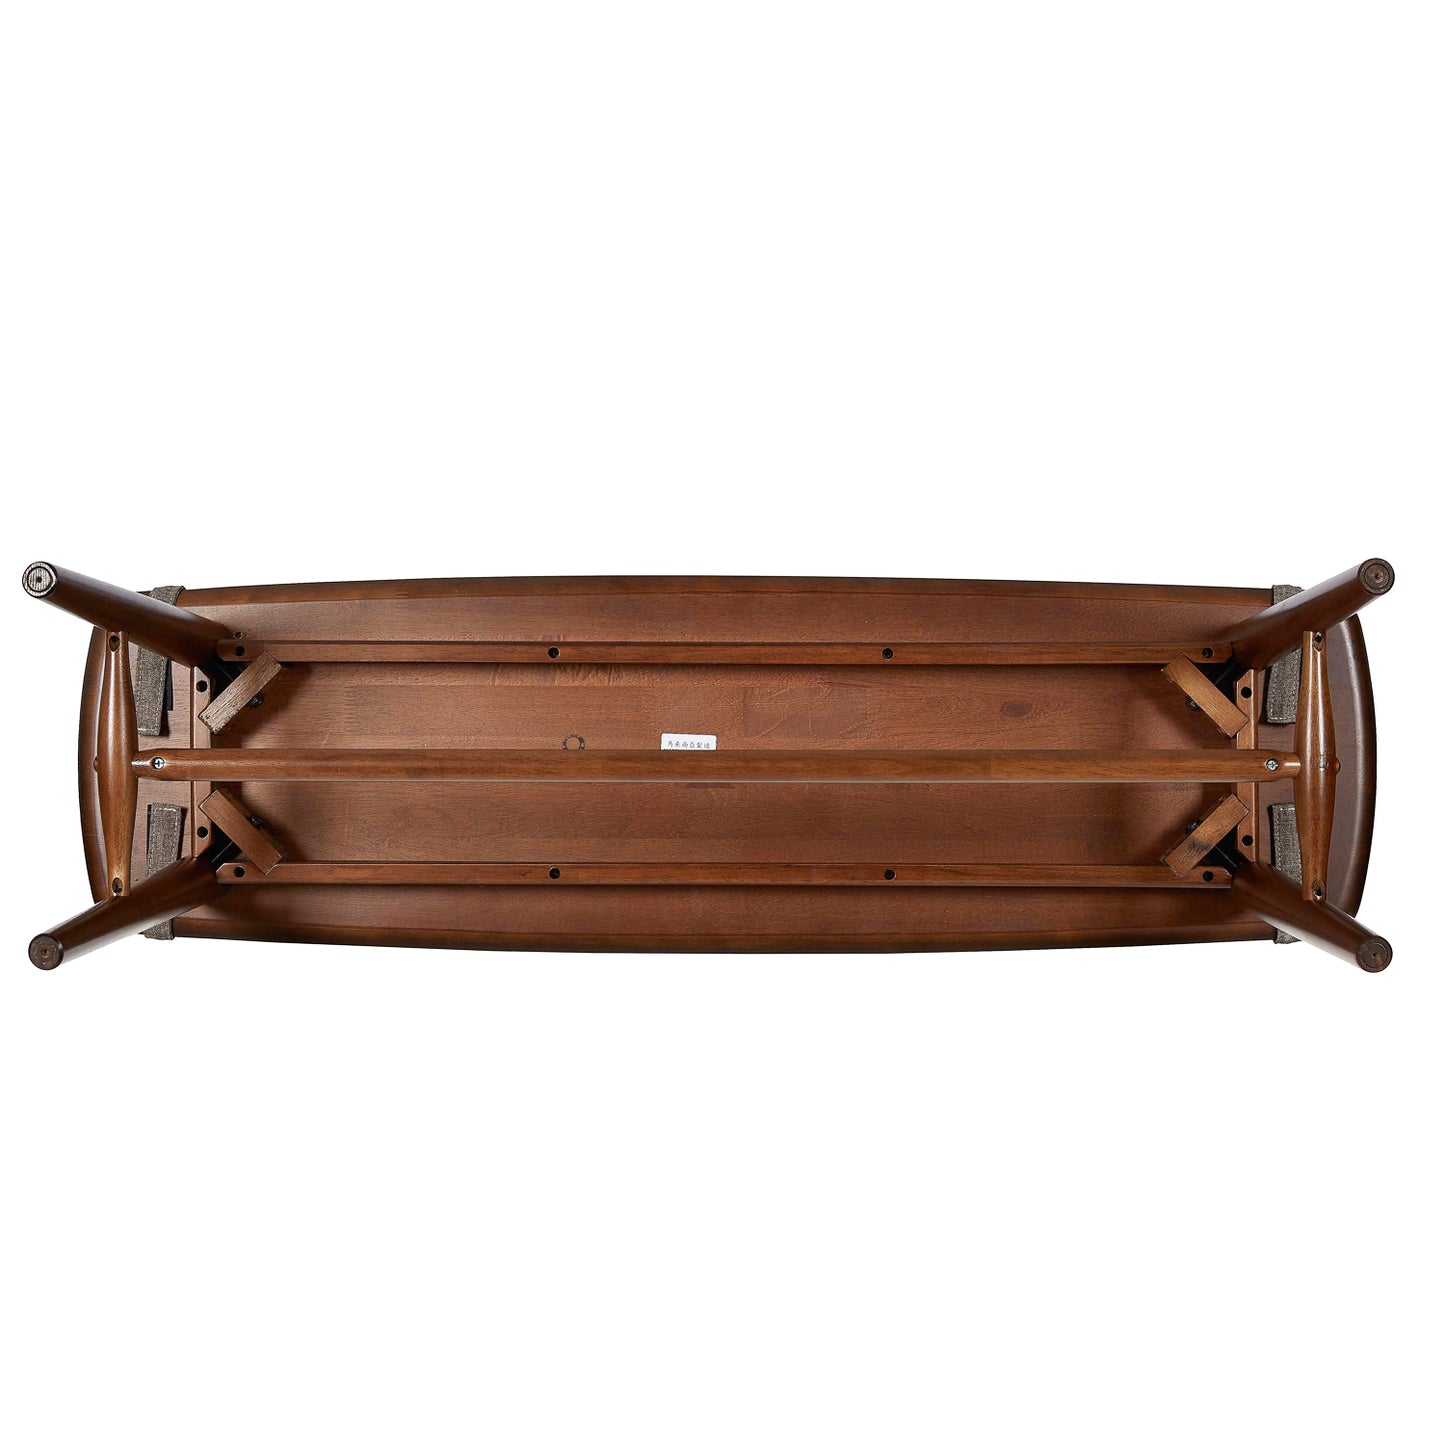 MacLuu Mid Century Modern Solid Wood Bench with Cushion 